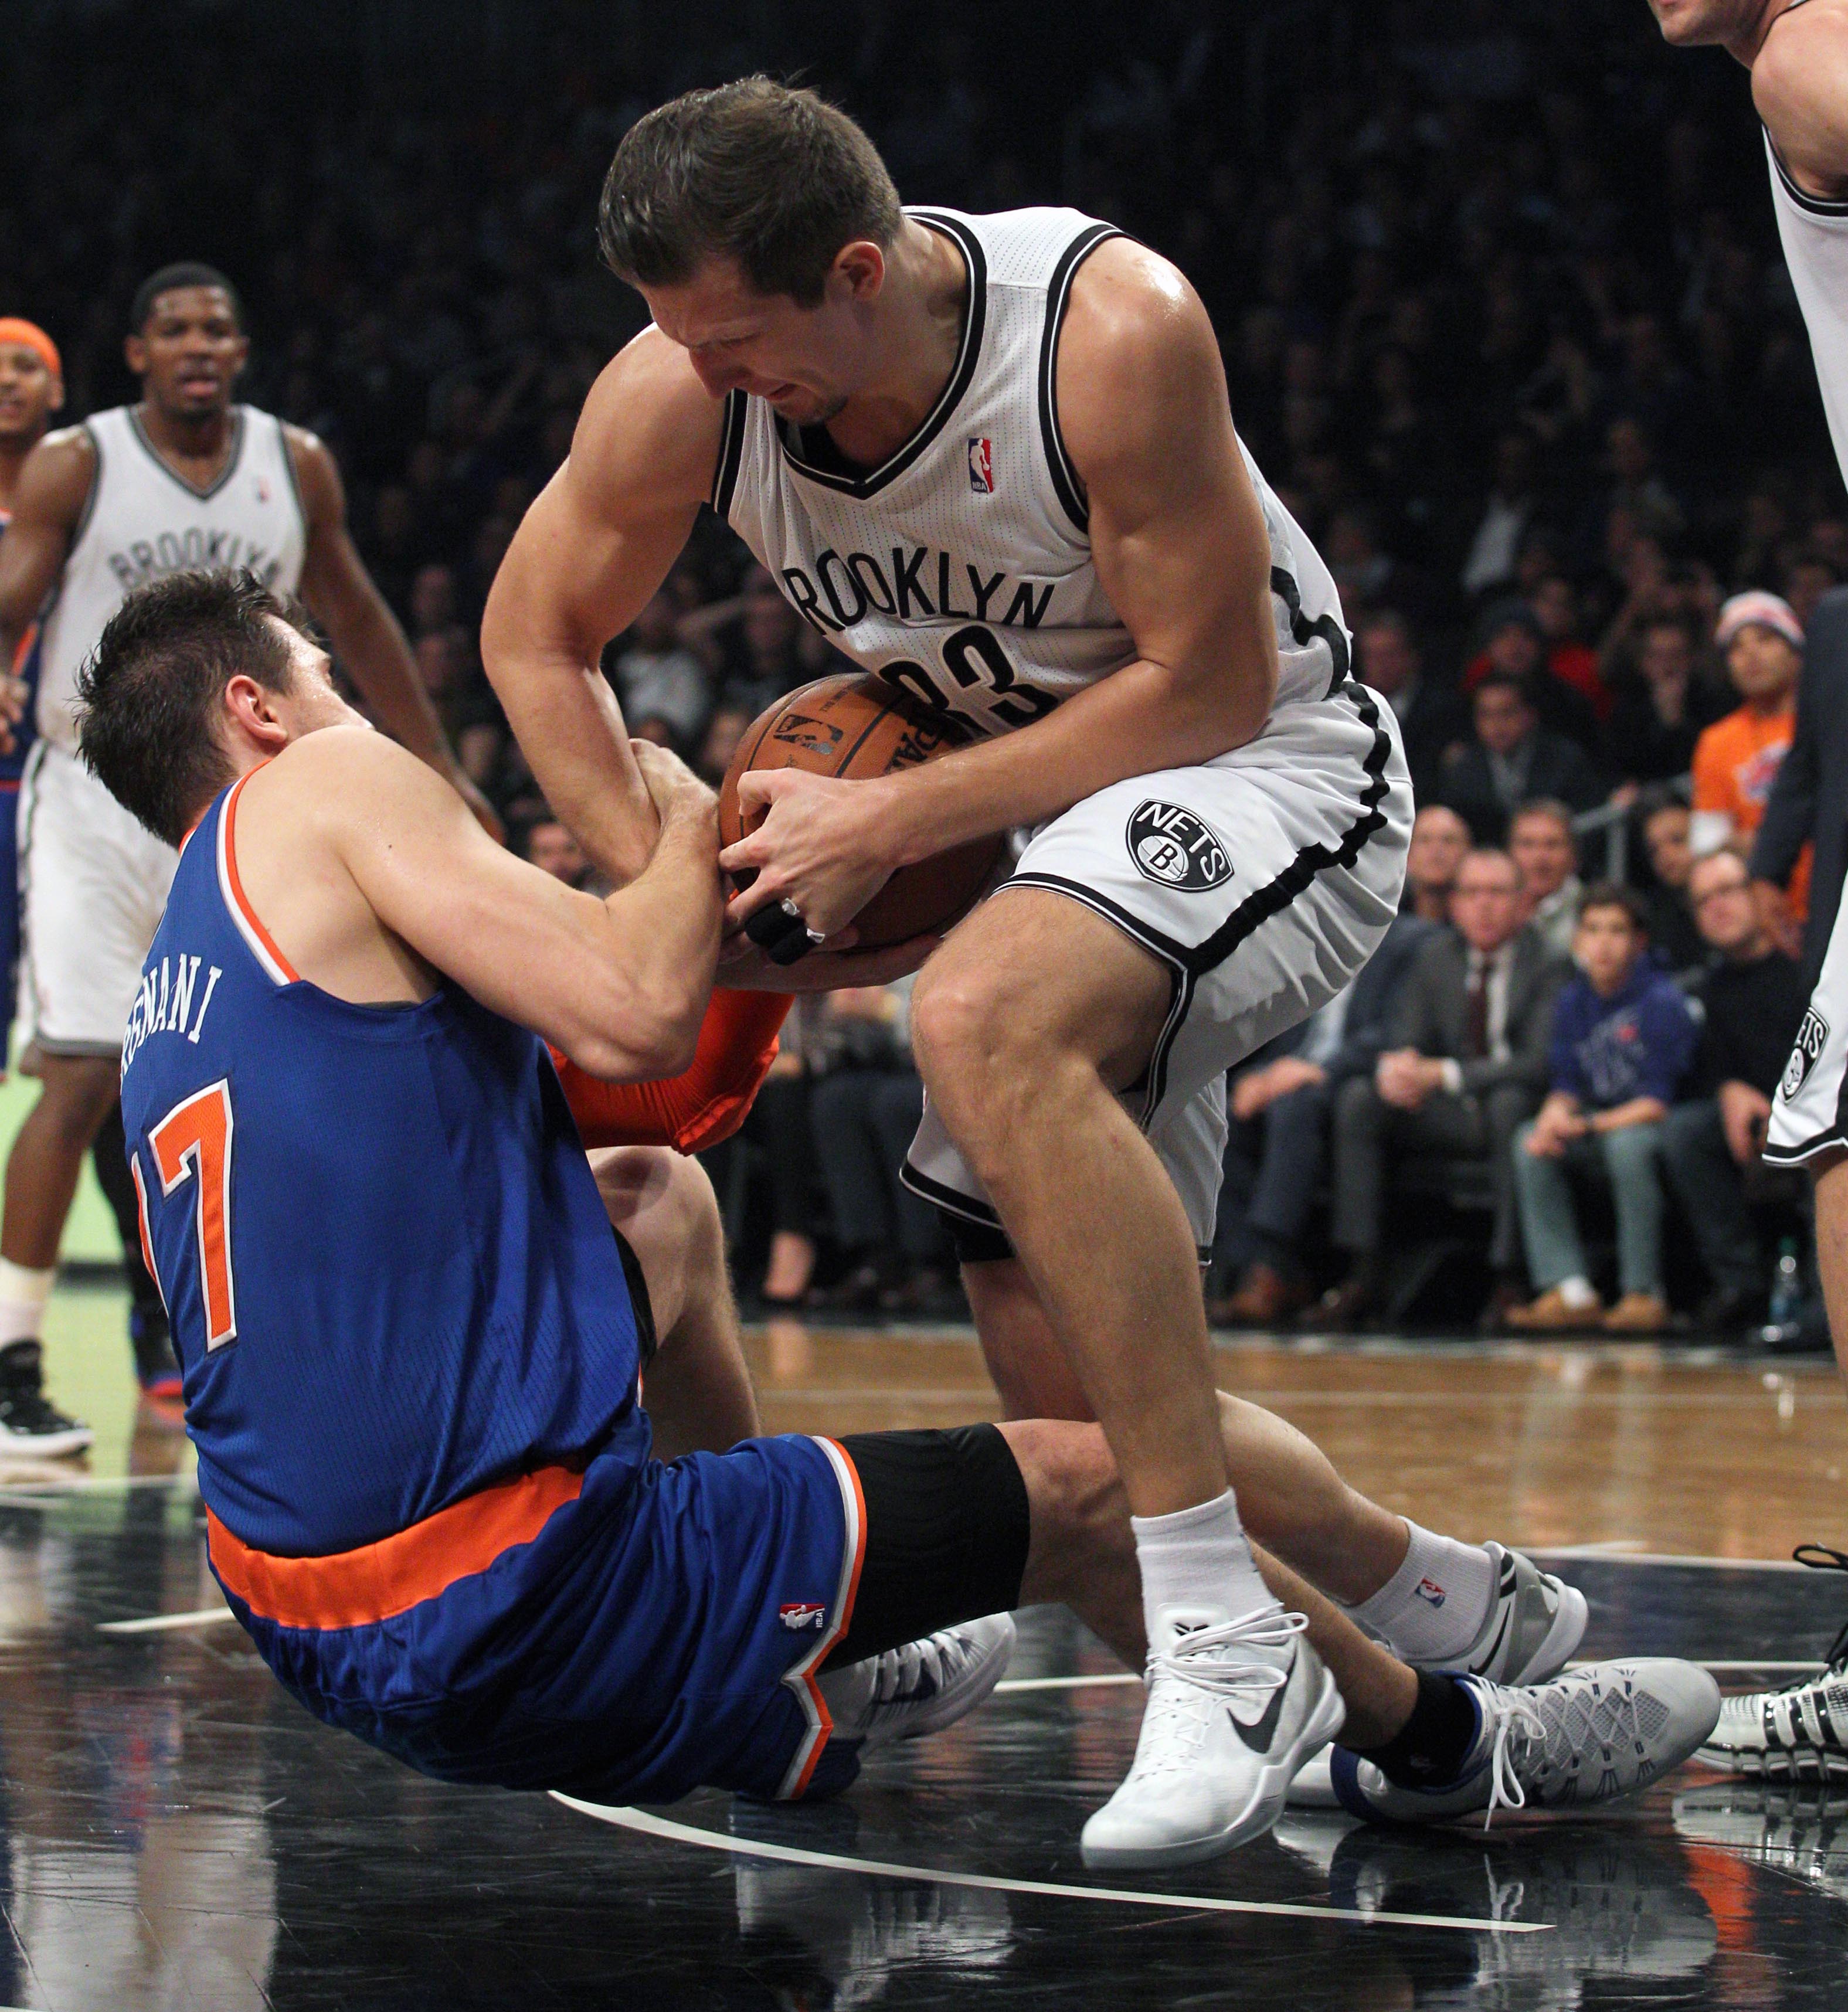 New York Knicks vs Brooklyn Nets Live Stream | FBStreams Link 5